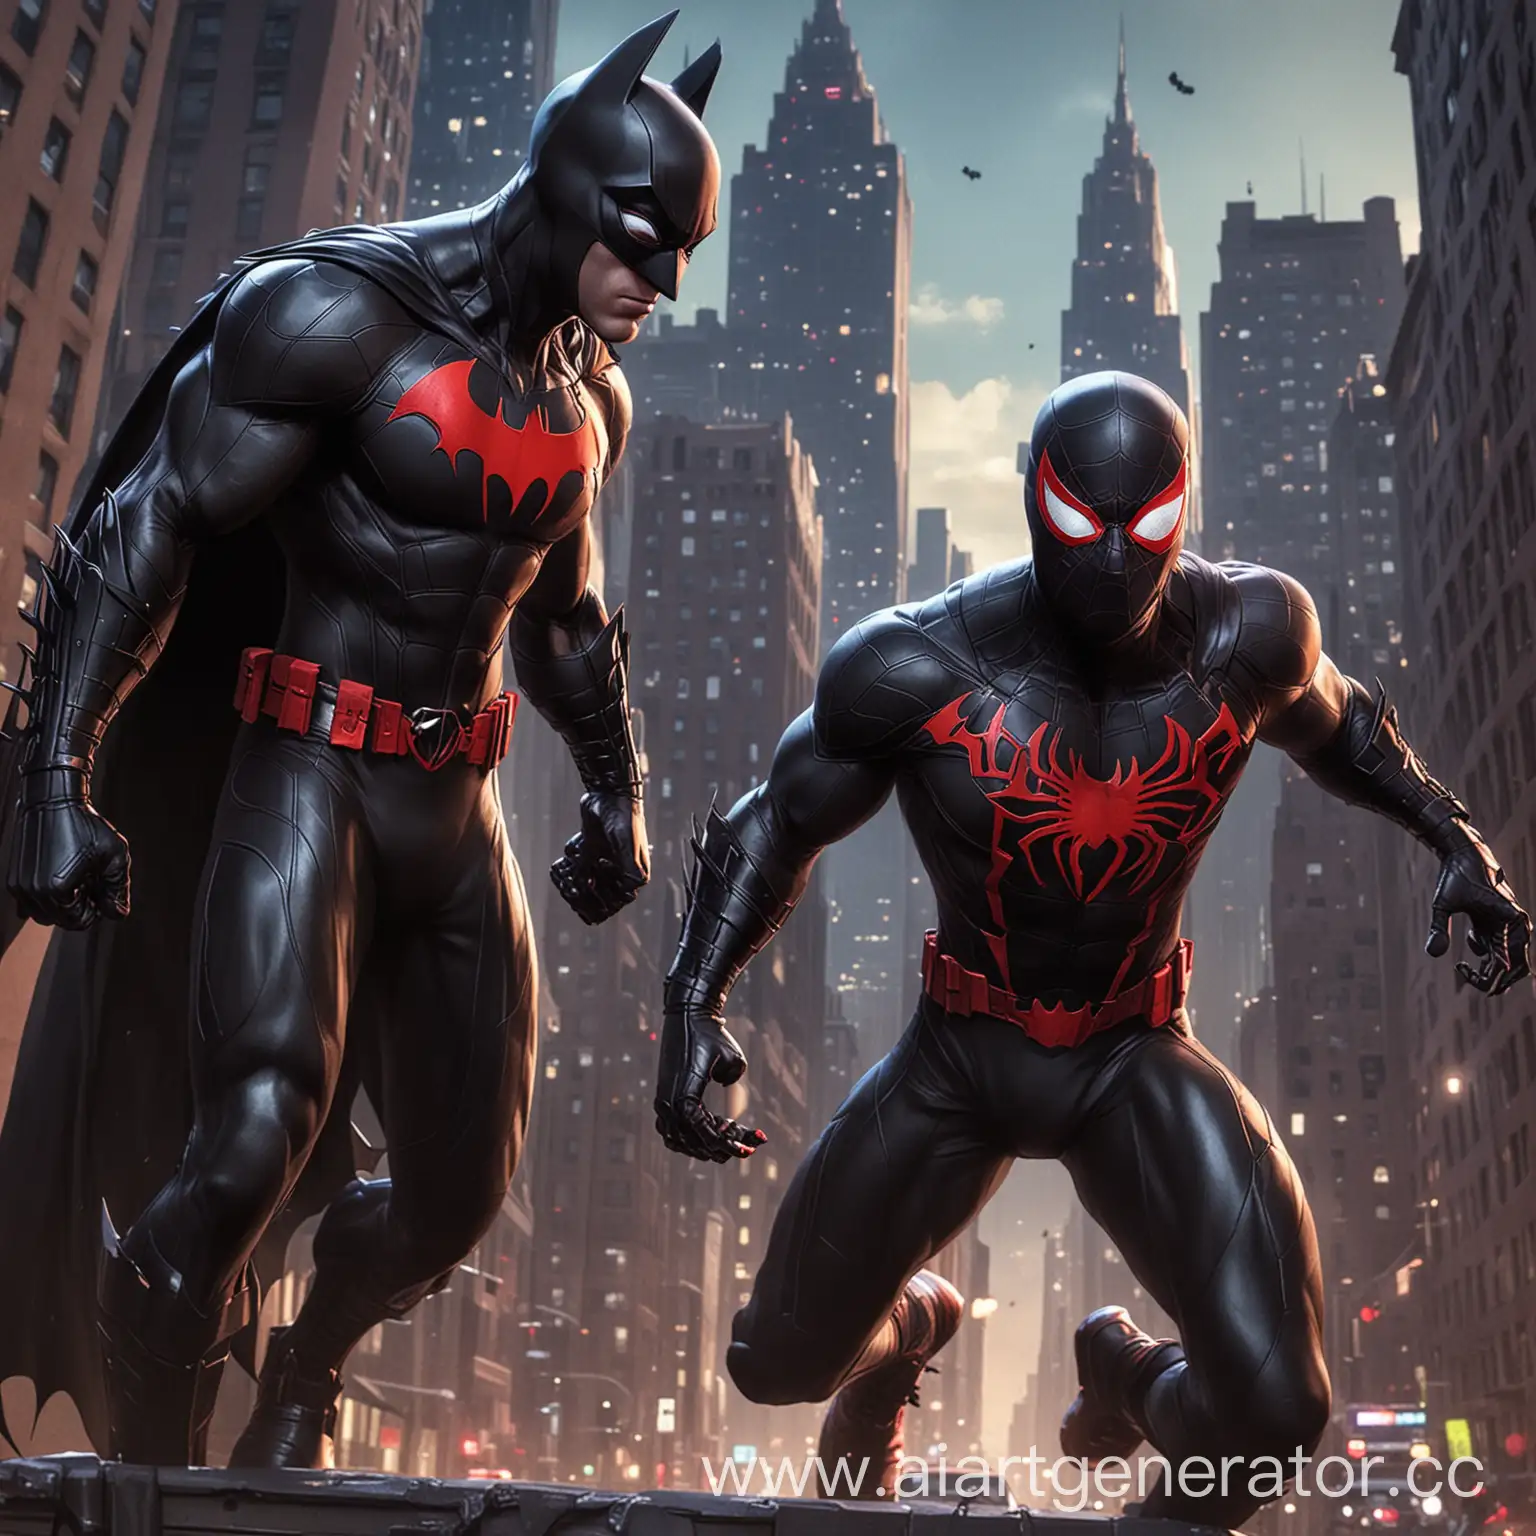 Batman in duo with Spiderman miles morales